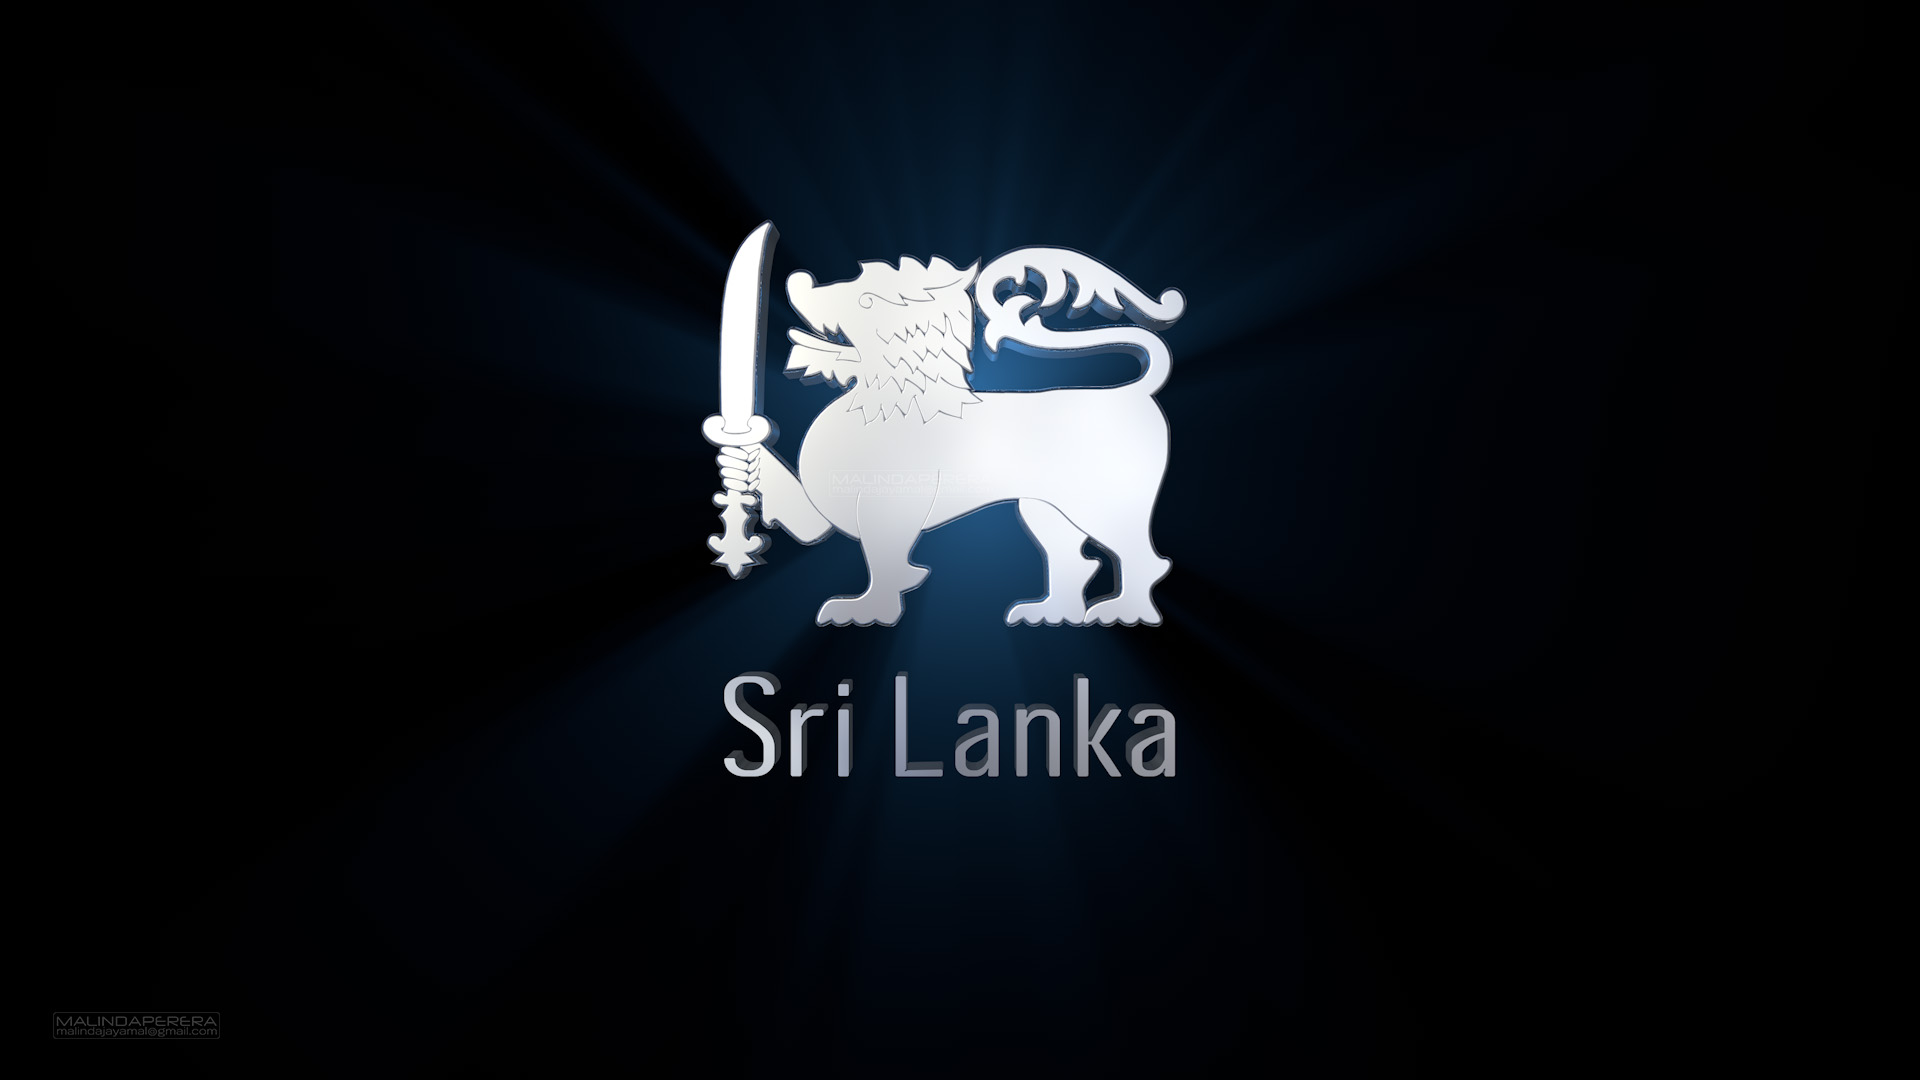 Sinhala - Flag Of Sri Lanka , HD Wallpaper & Backgrounds